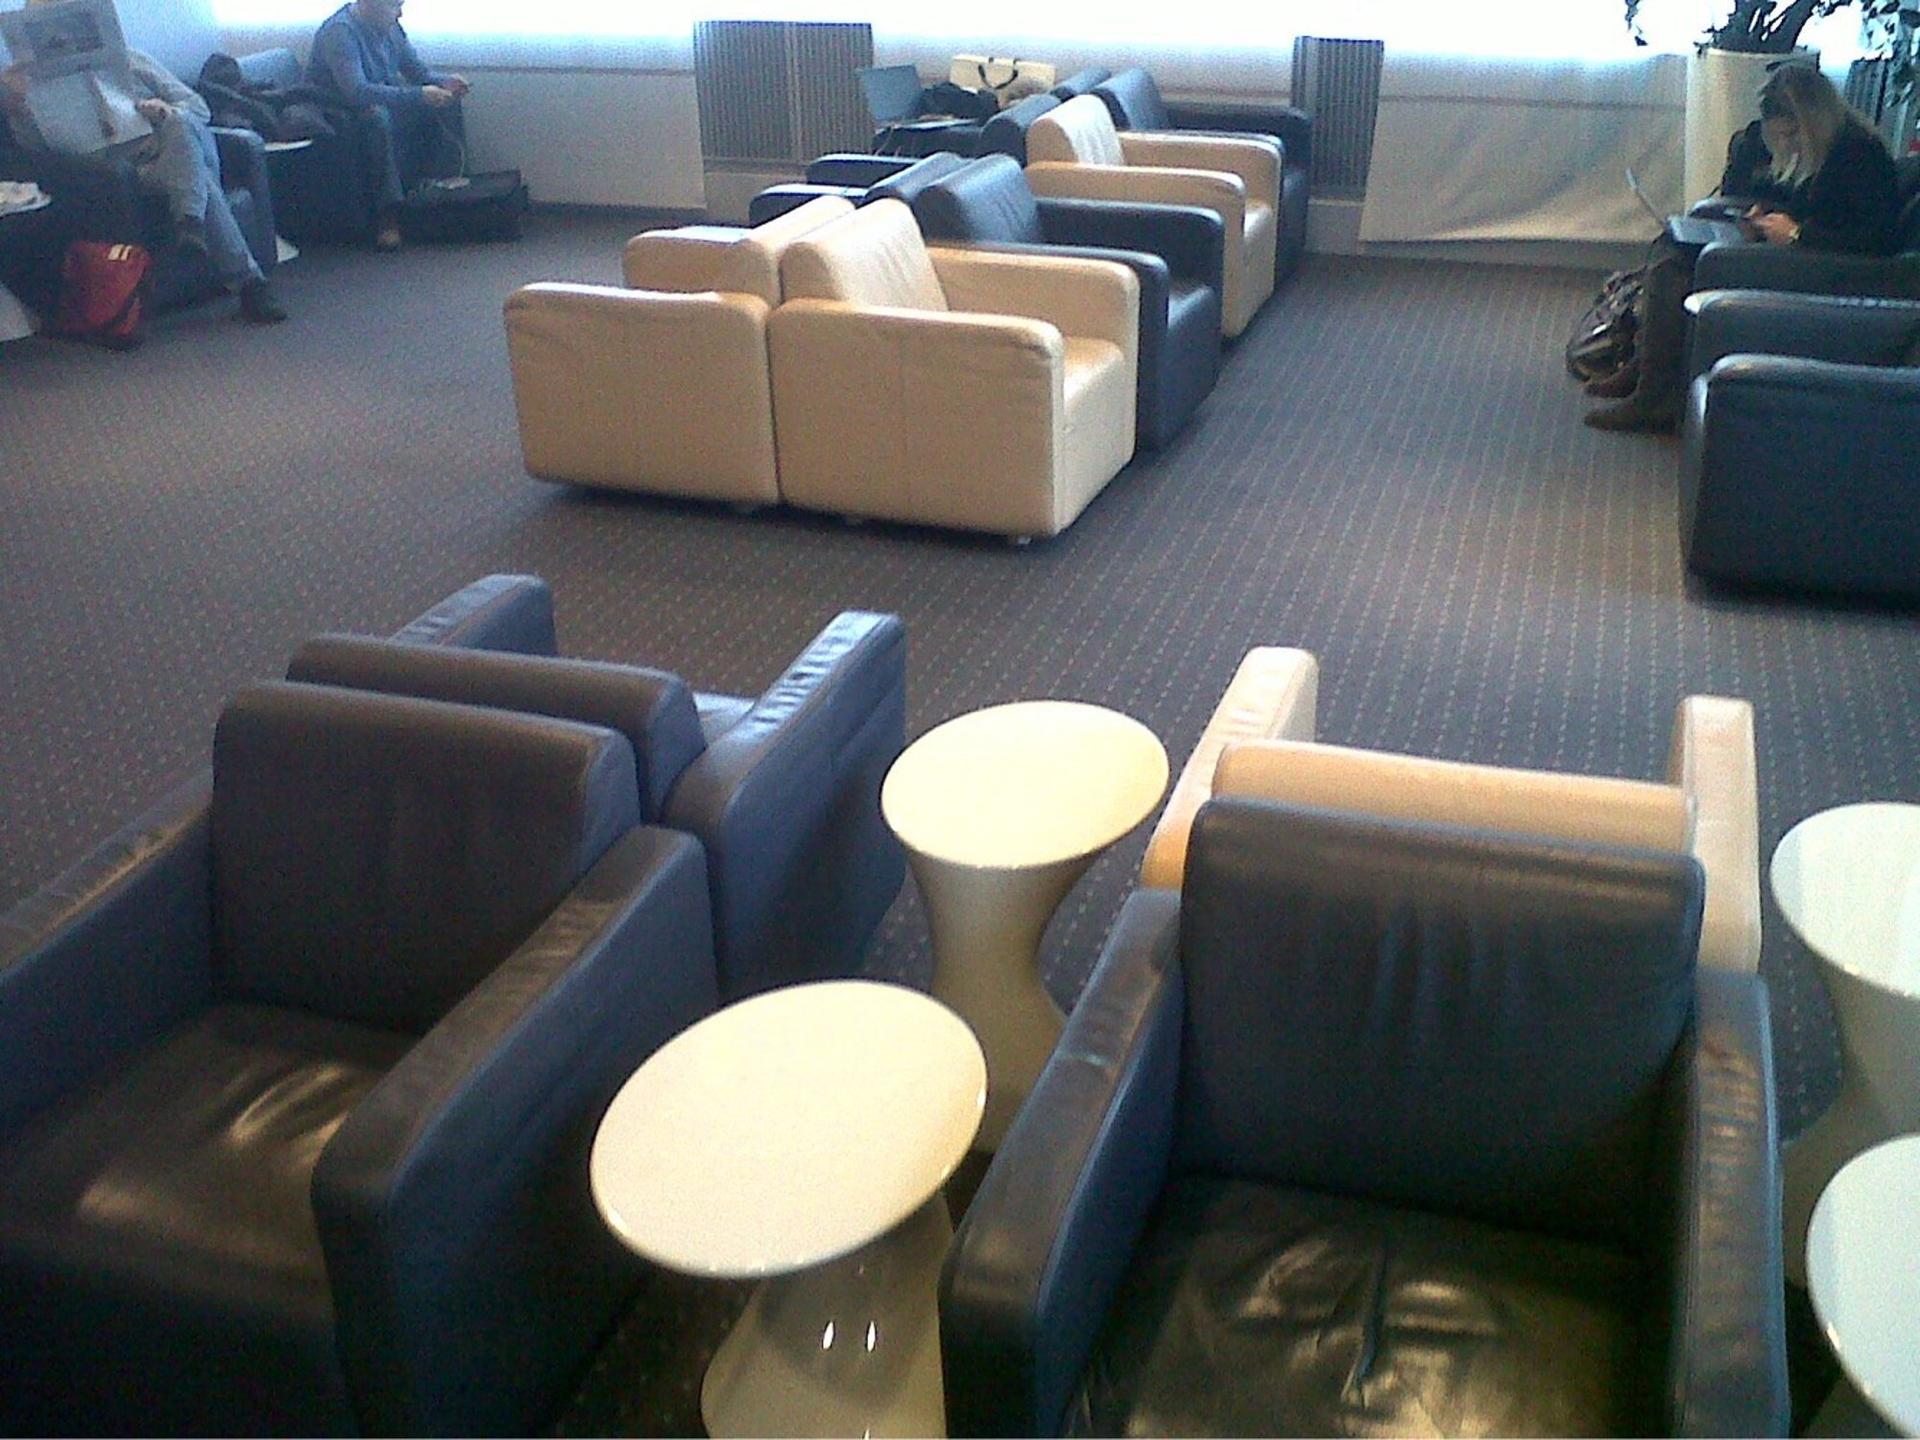 Lufthansa Business Lounge image 13 of 13